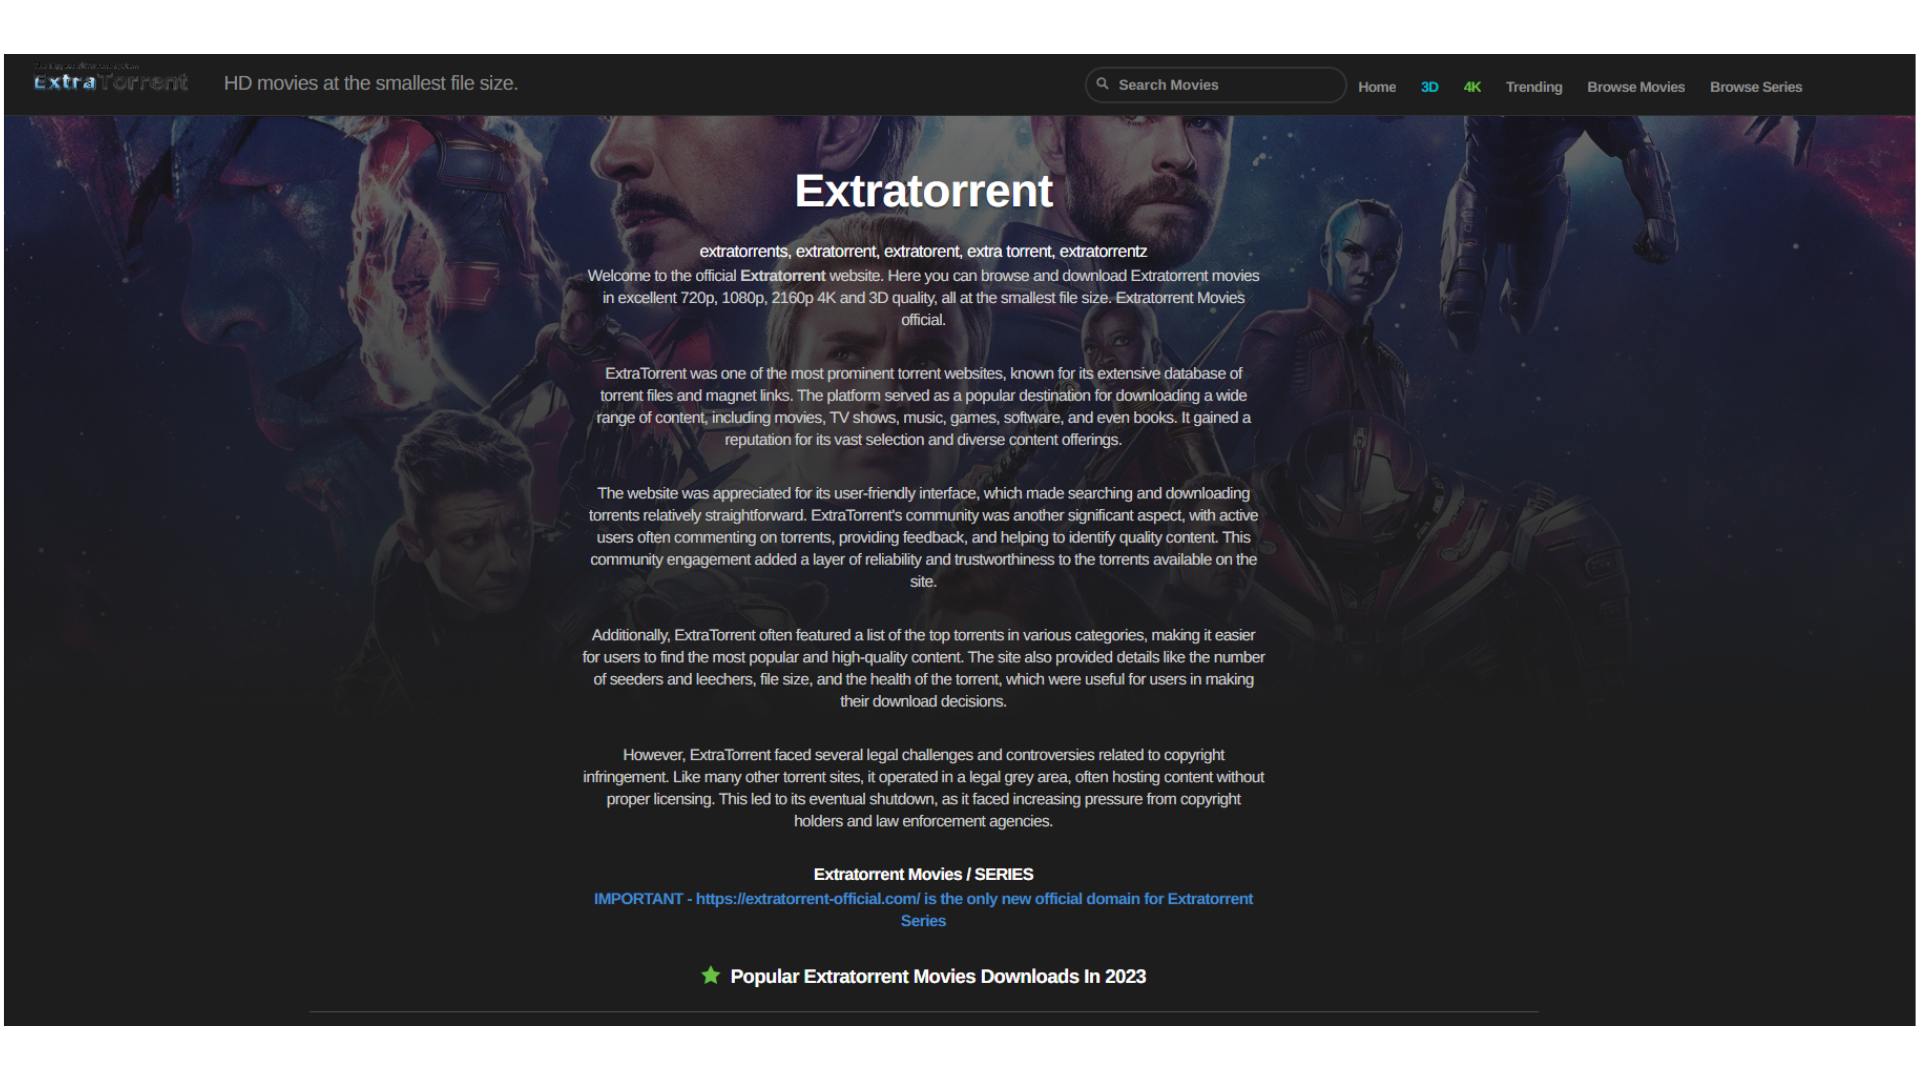 ExtraTorrents main Web